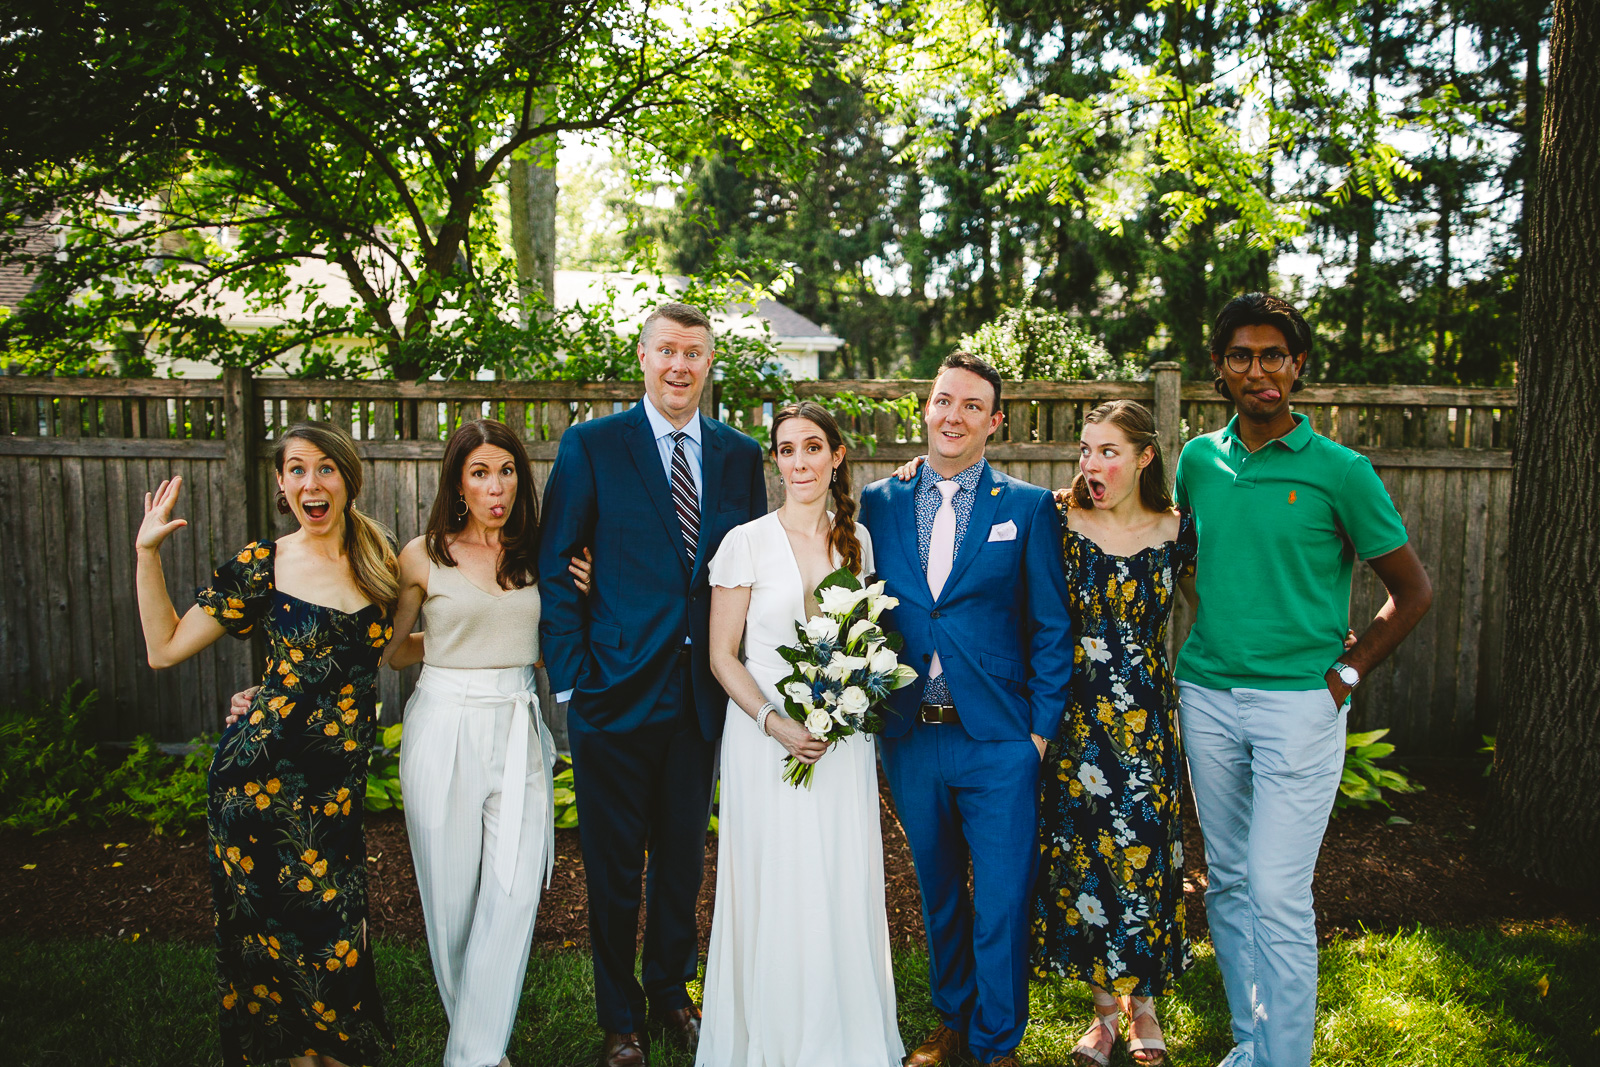 33 fun family portraits during backyard wedding - Amazing Wedding in Backyard // Kristen + Jeff